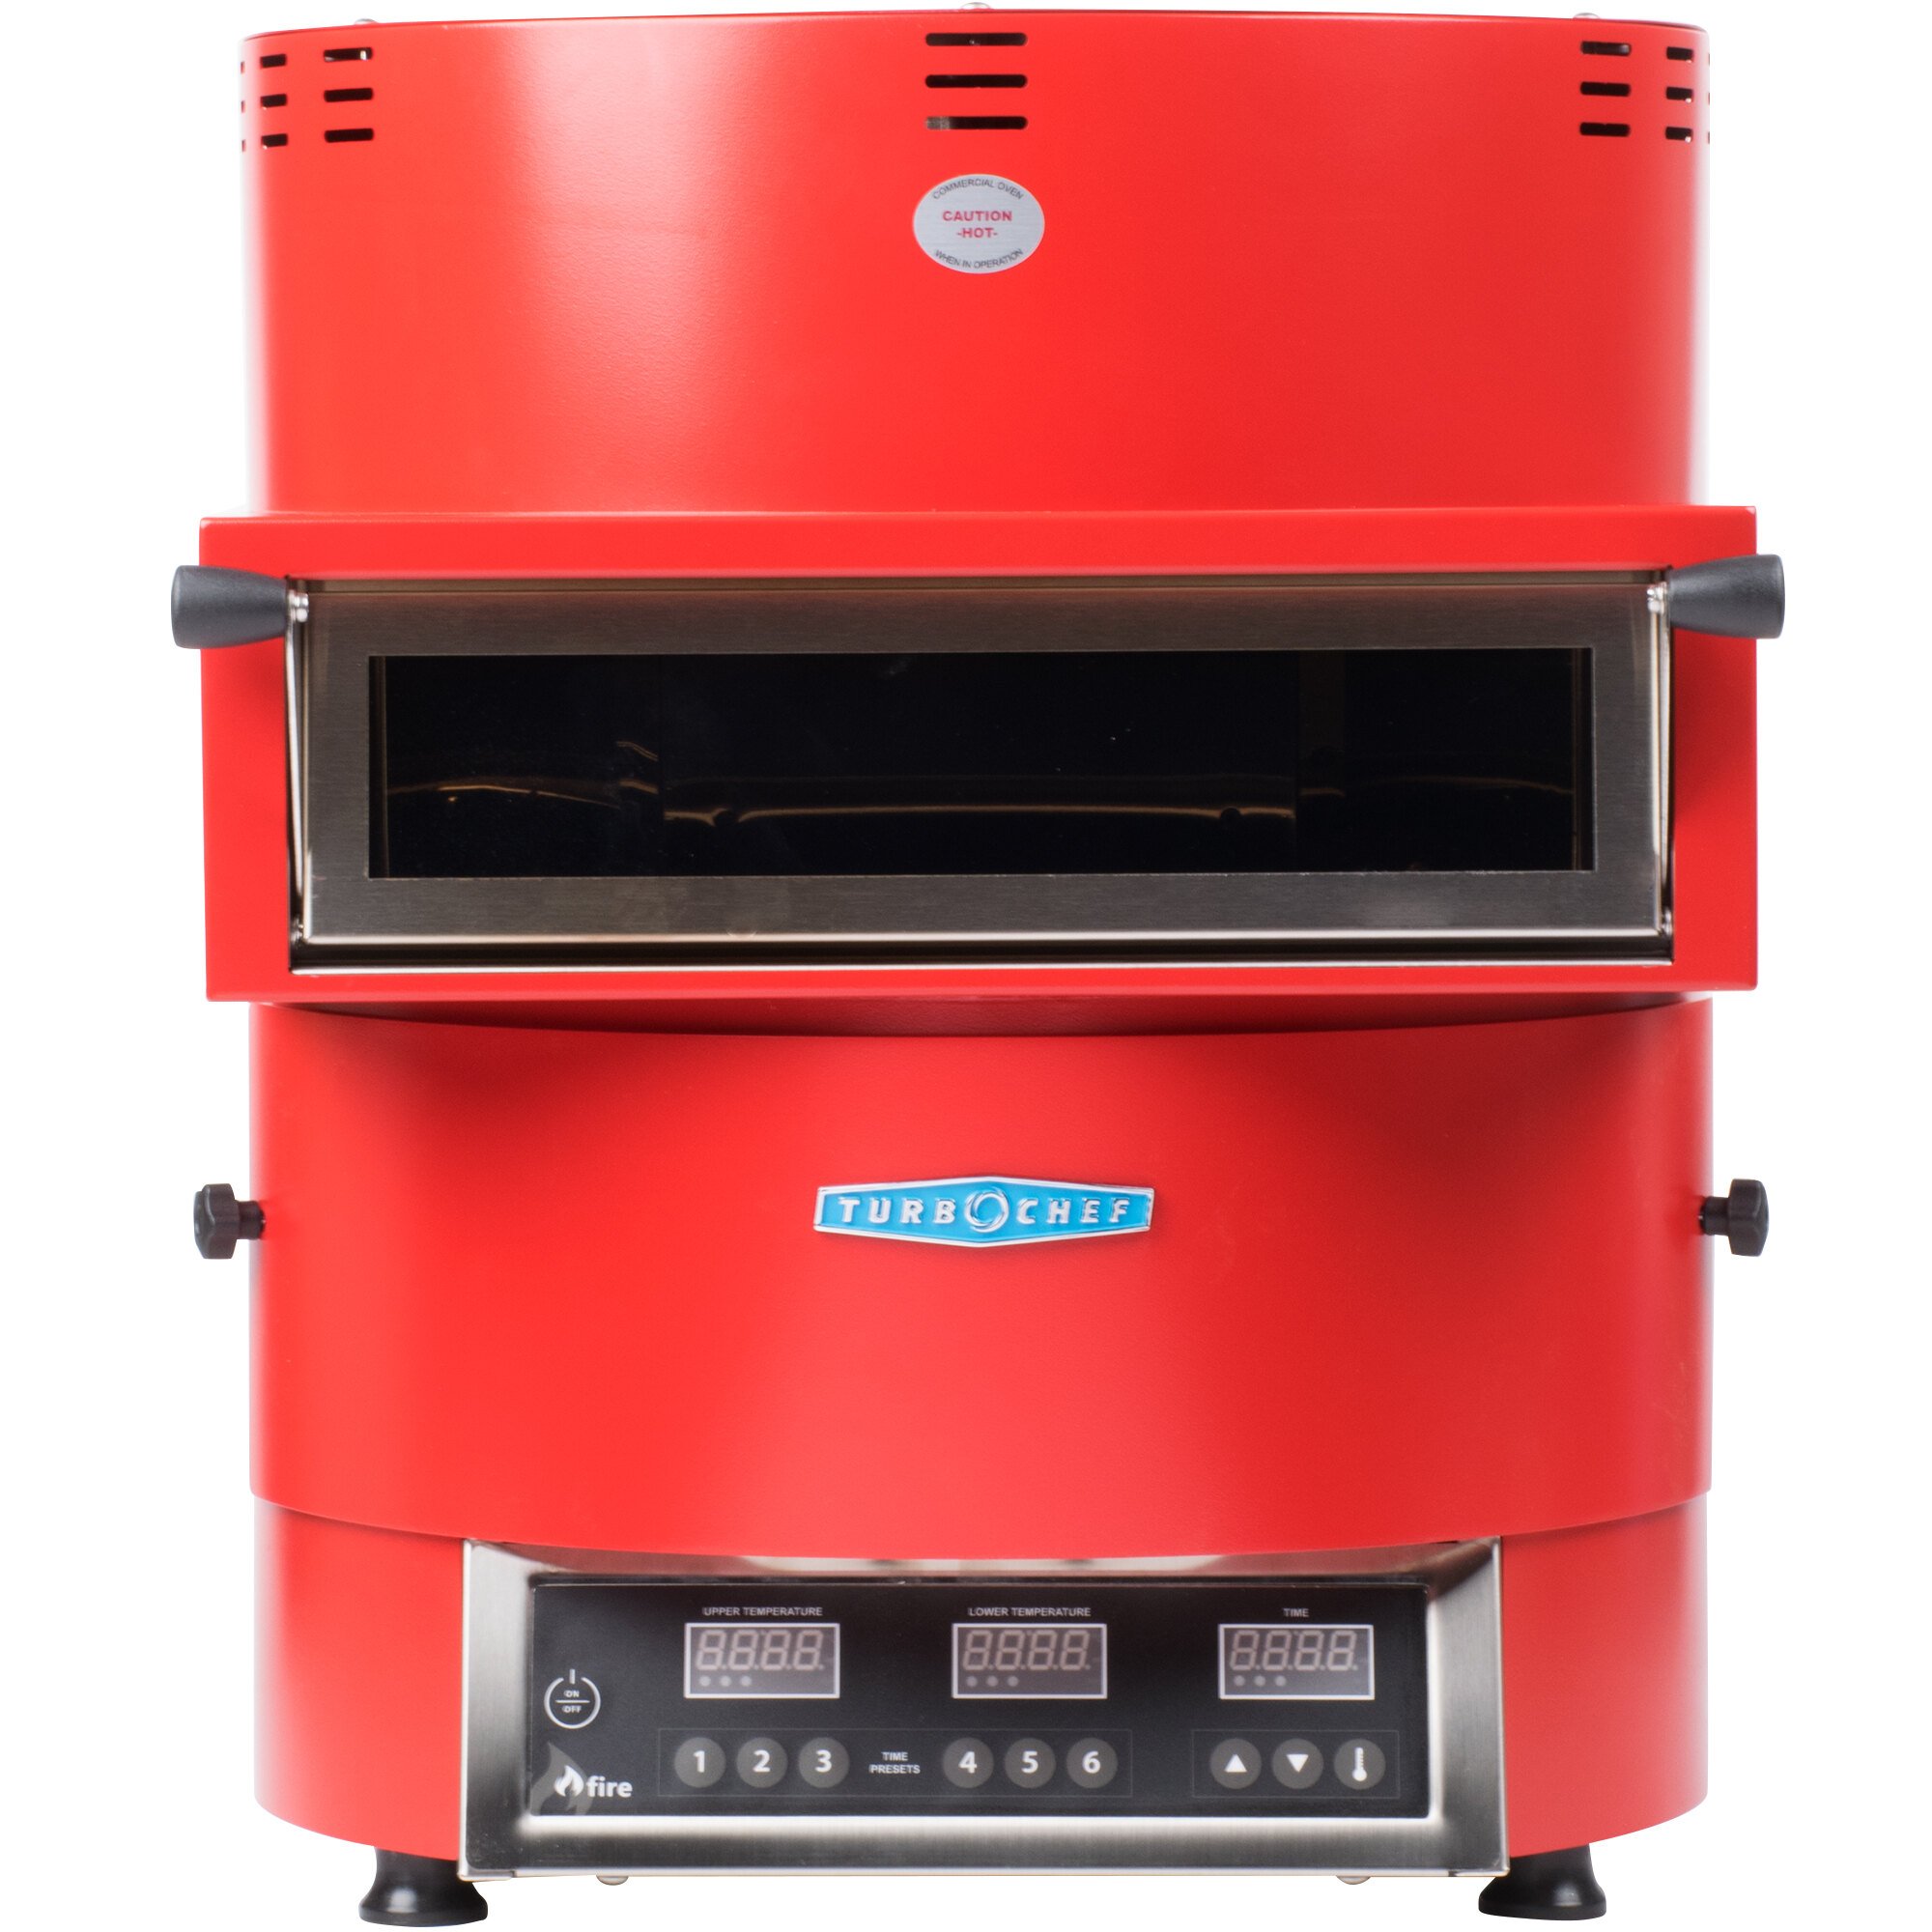 Pizza Oven | Turbochef Fire FRE-9500-1 Red Countertop Pizza Oven